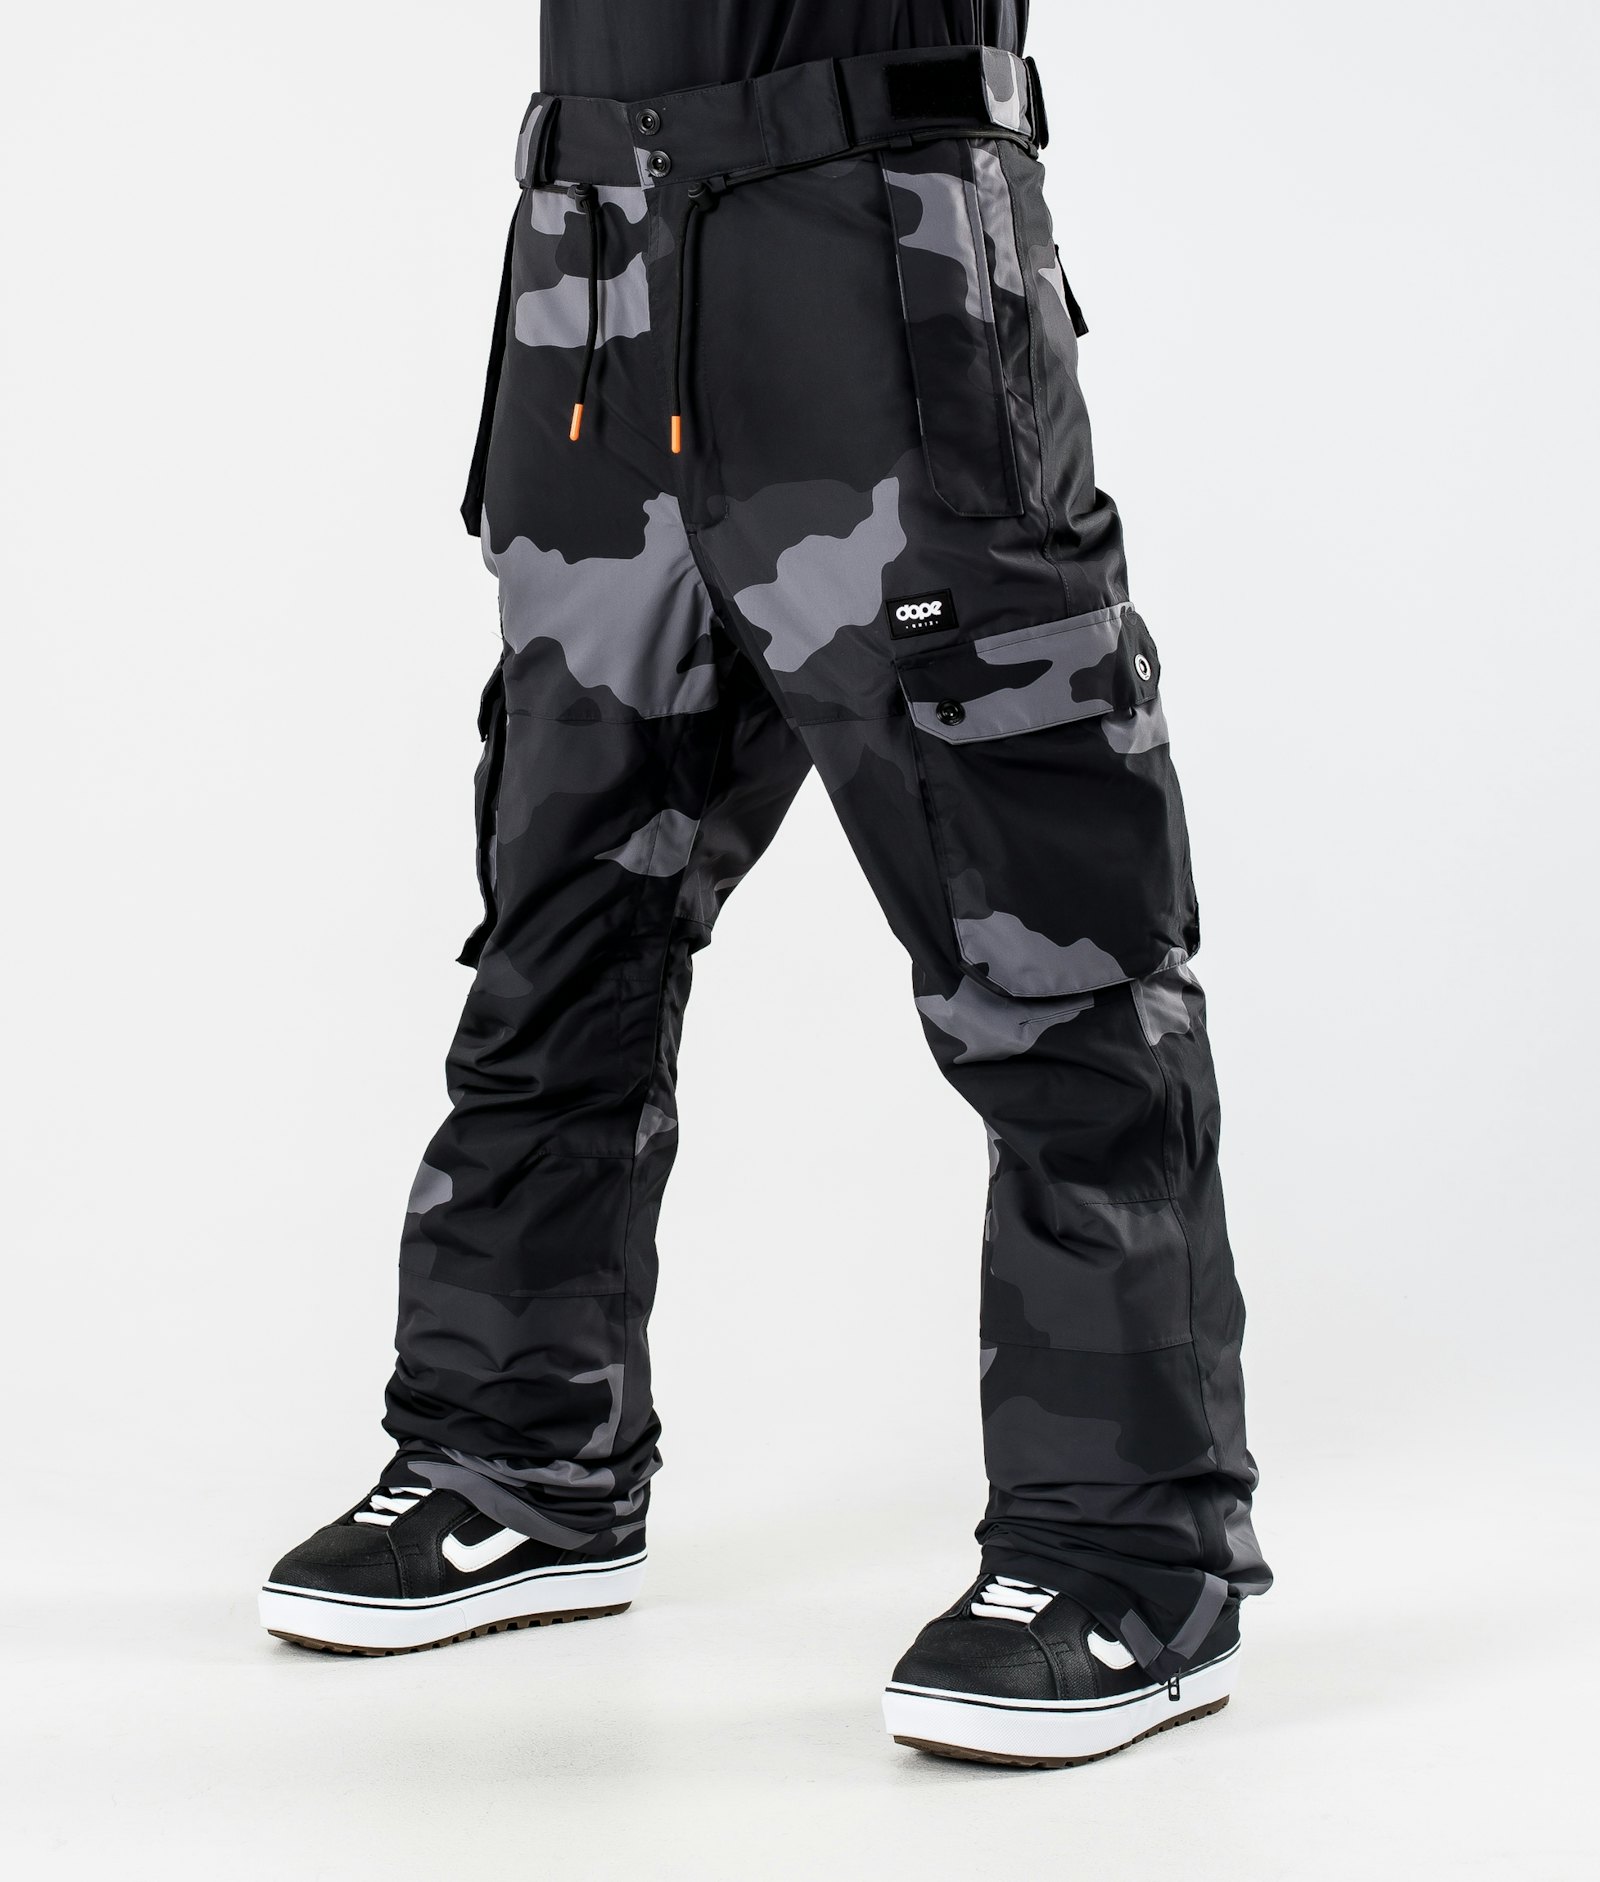 Dope Iconic 2020 Pantaloni Snowboard Uomo Black Camo